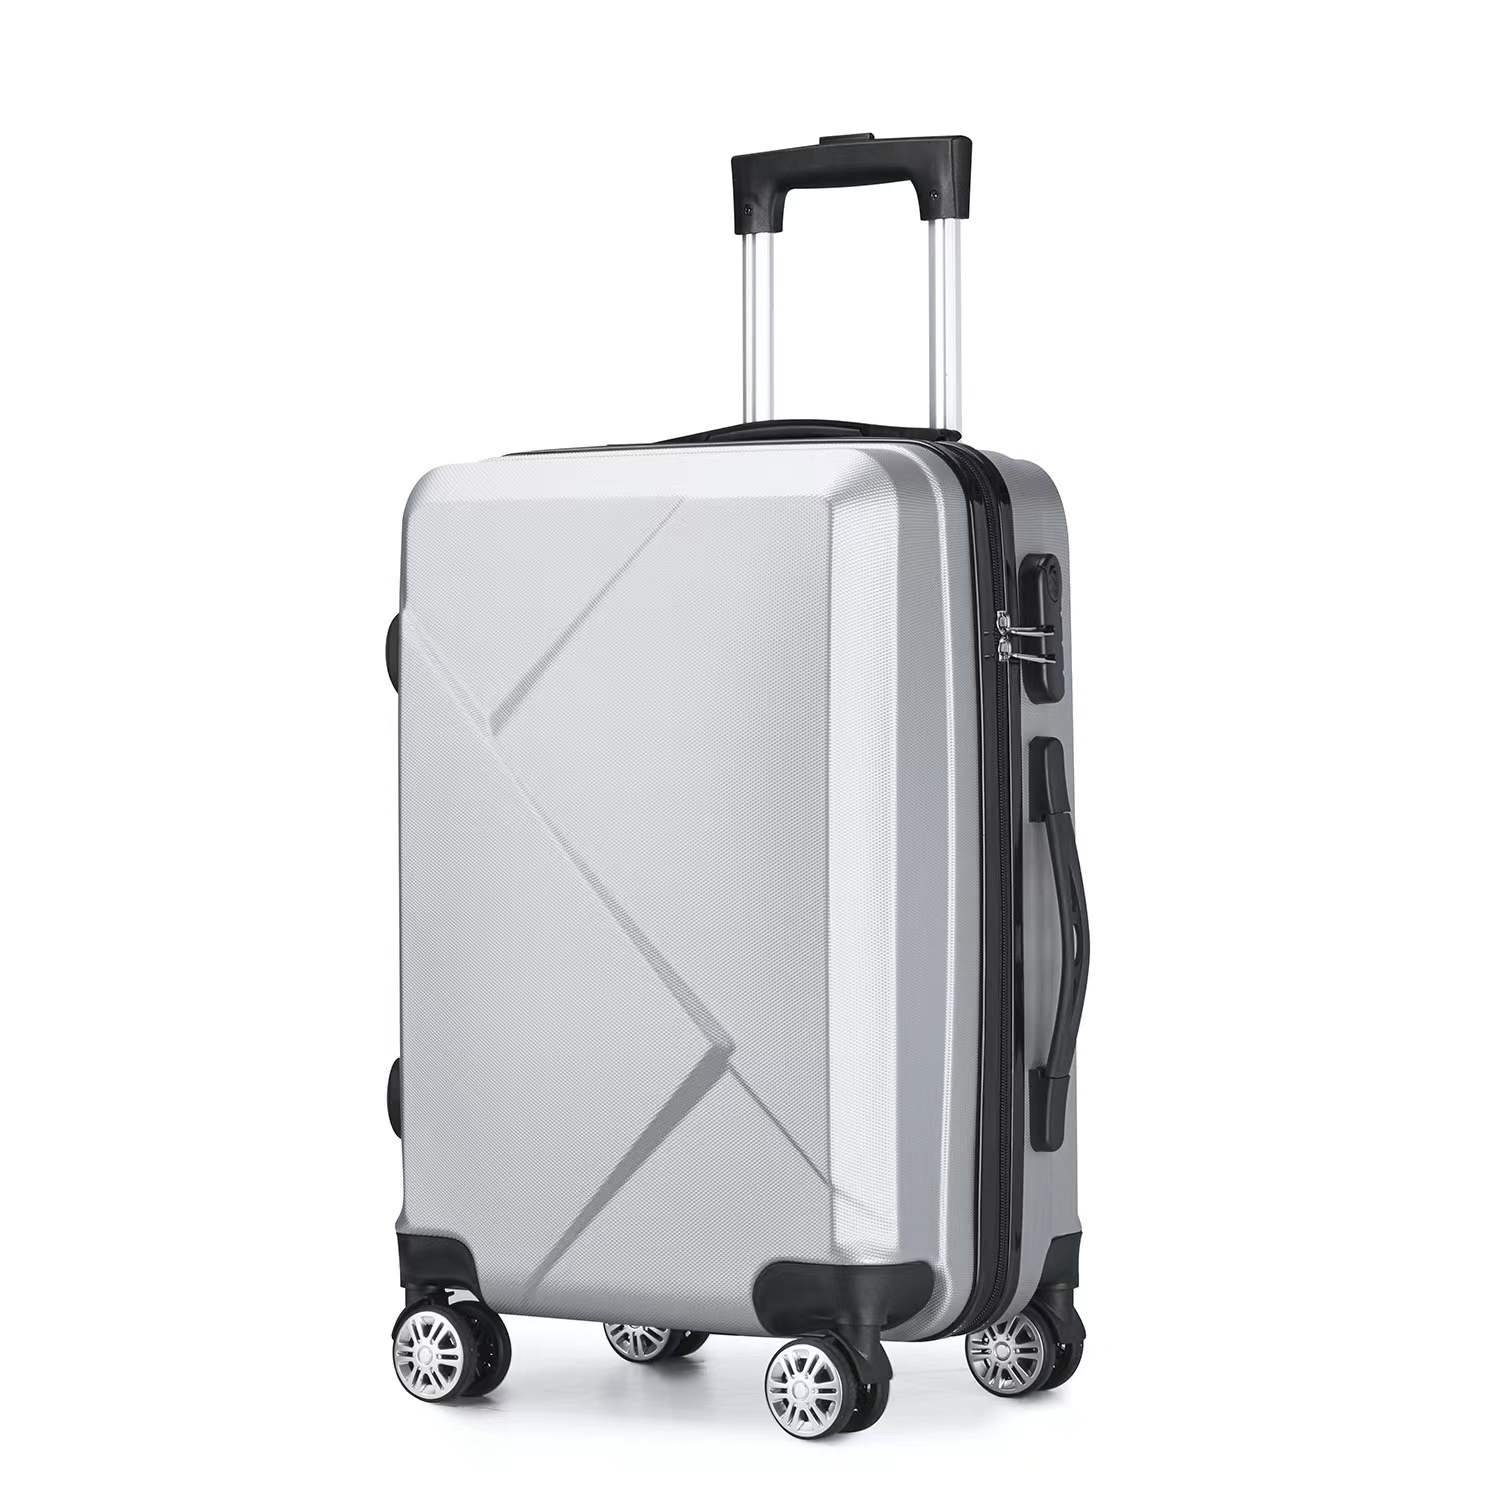 Luggage Sets 3pcs Lightweight Trolley Travel ABS + PC Hard Plhaub Suitcase nrog 4 Spinner log